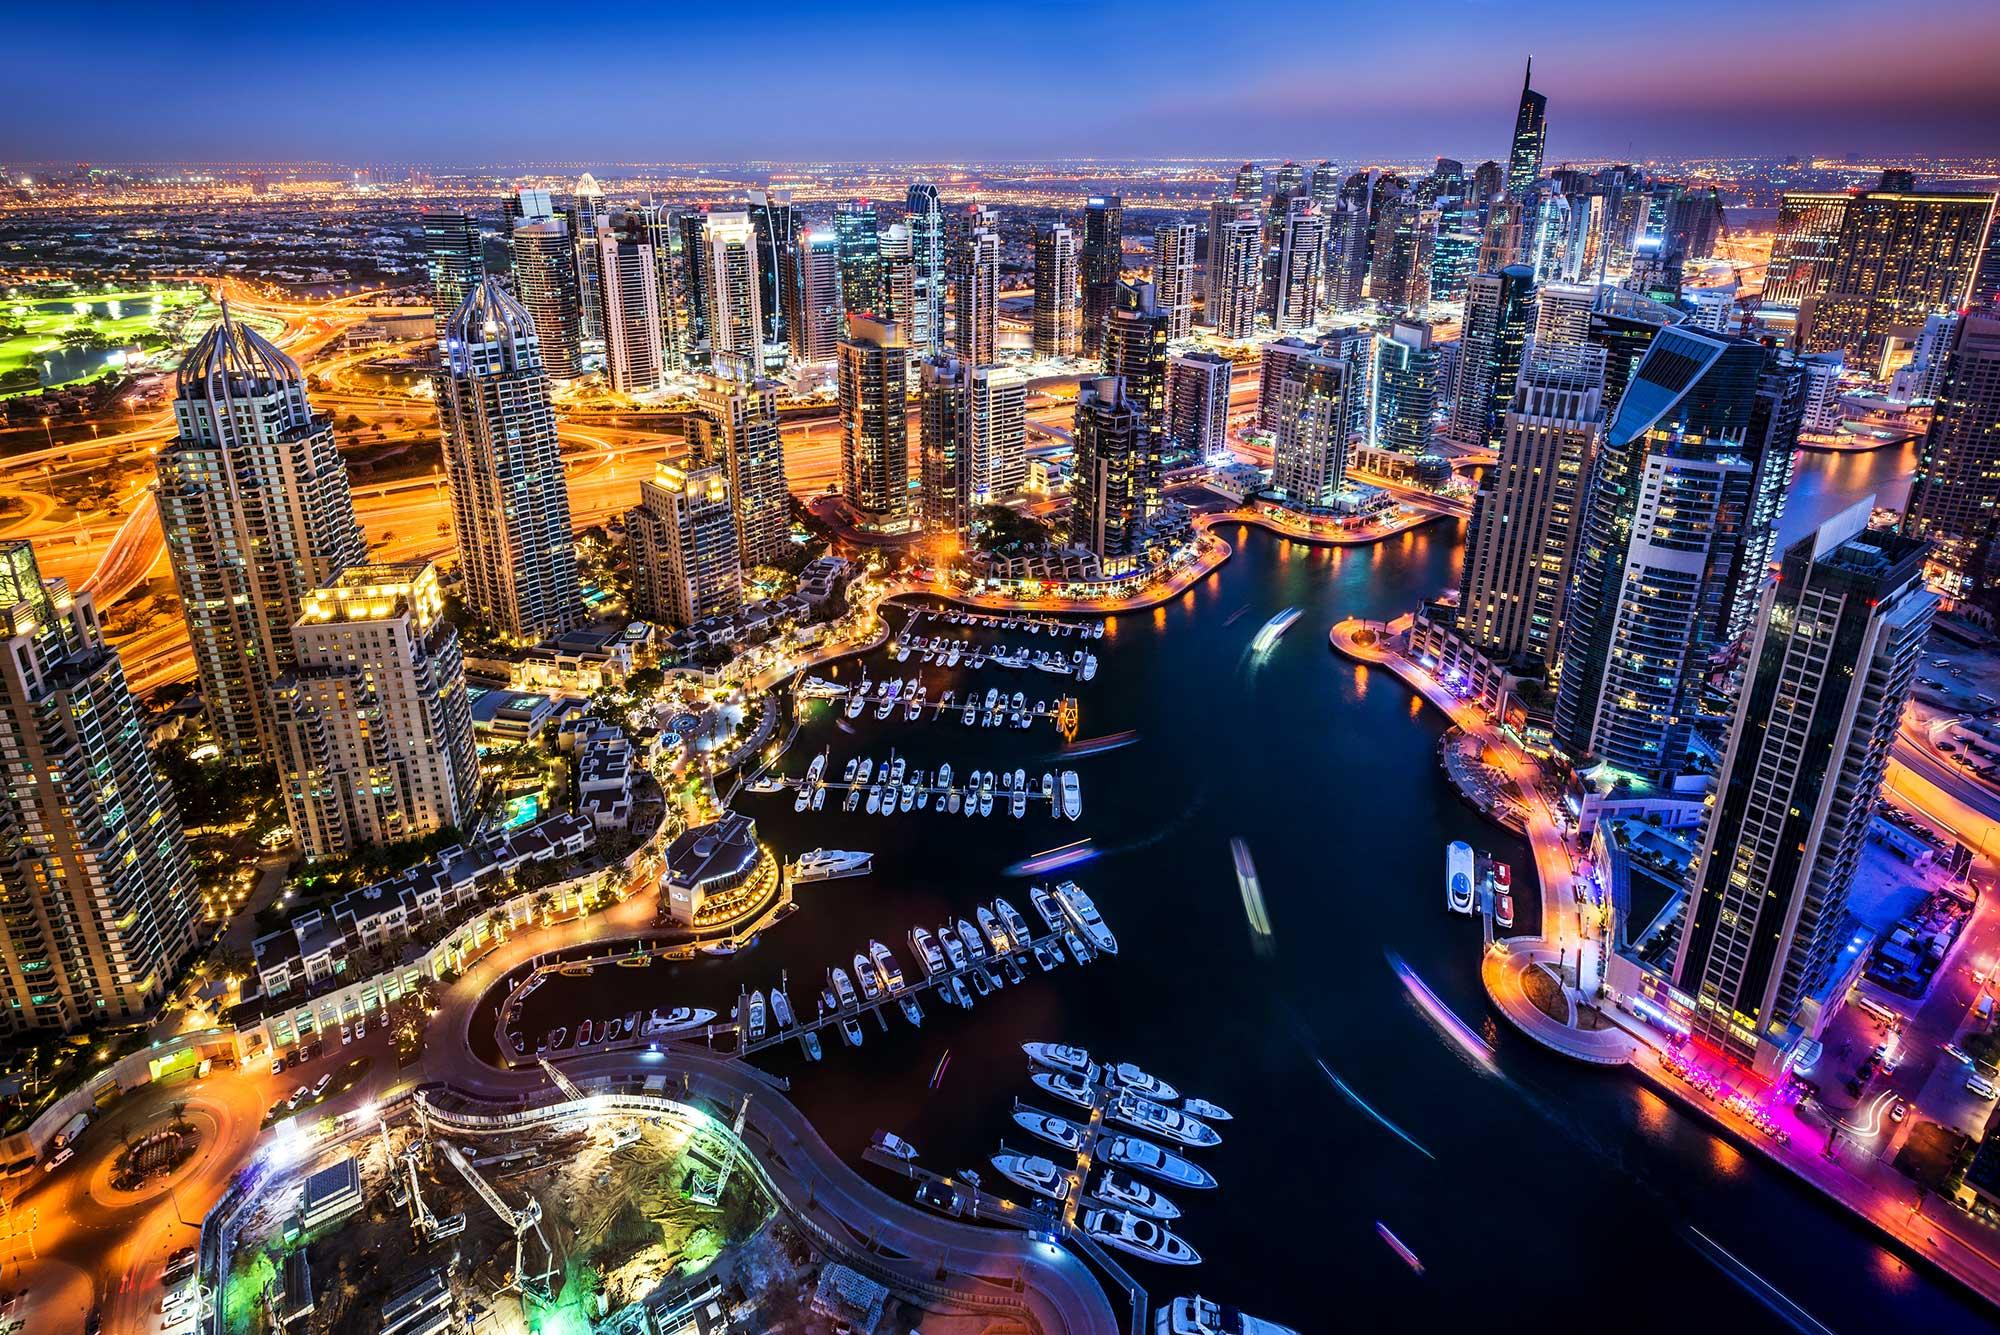 8 Visitas Imprescindibles en tu Viaje a Dubái Blog de Viajes Carrefour